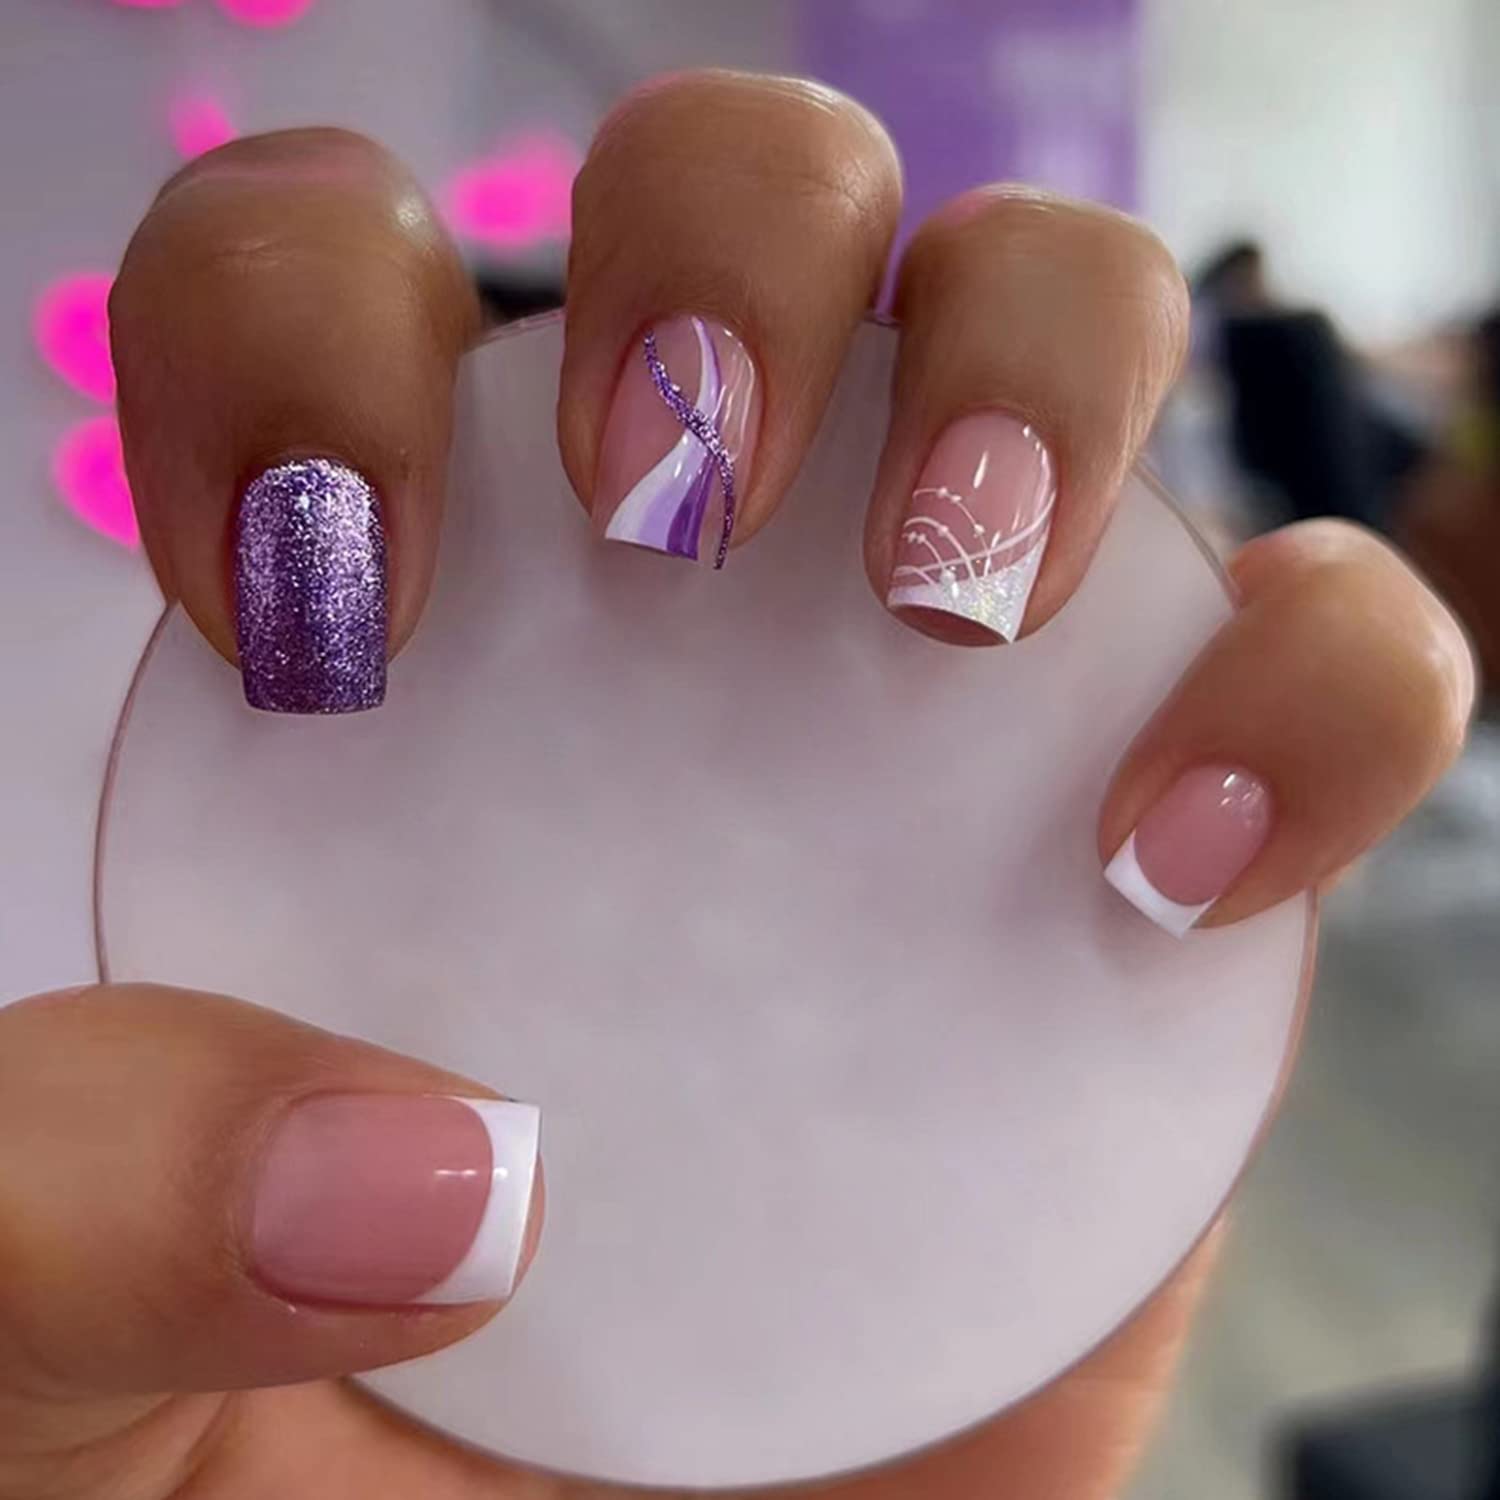 32 Gorgeous Nail Art Designs – Pretty short nails